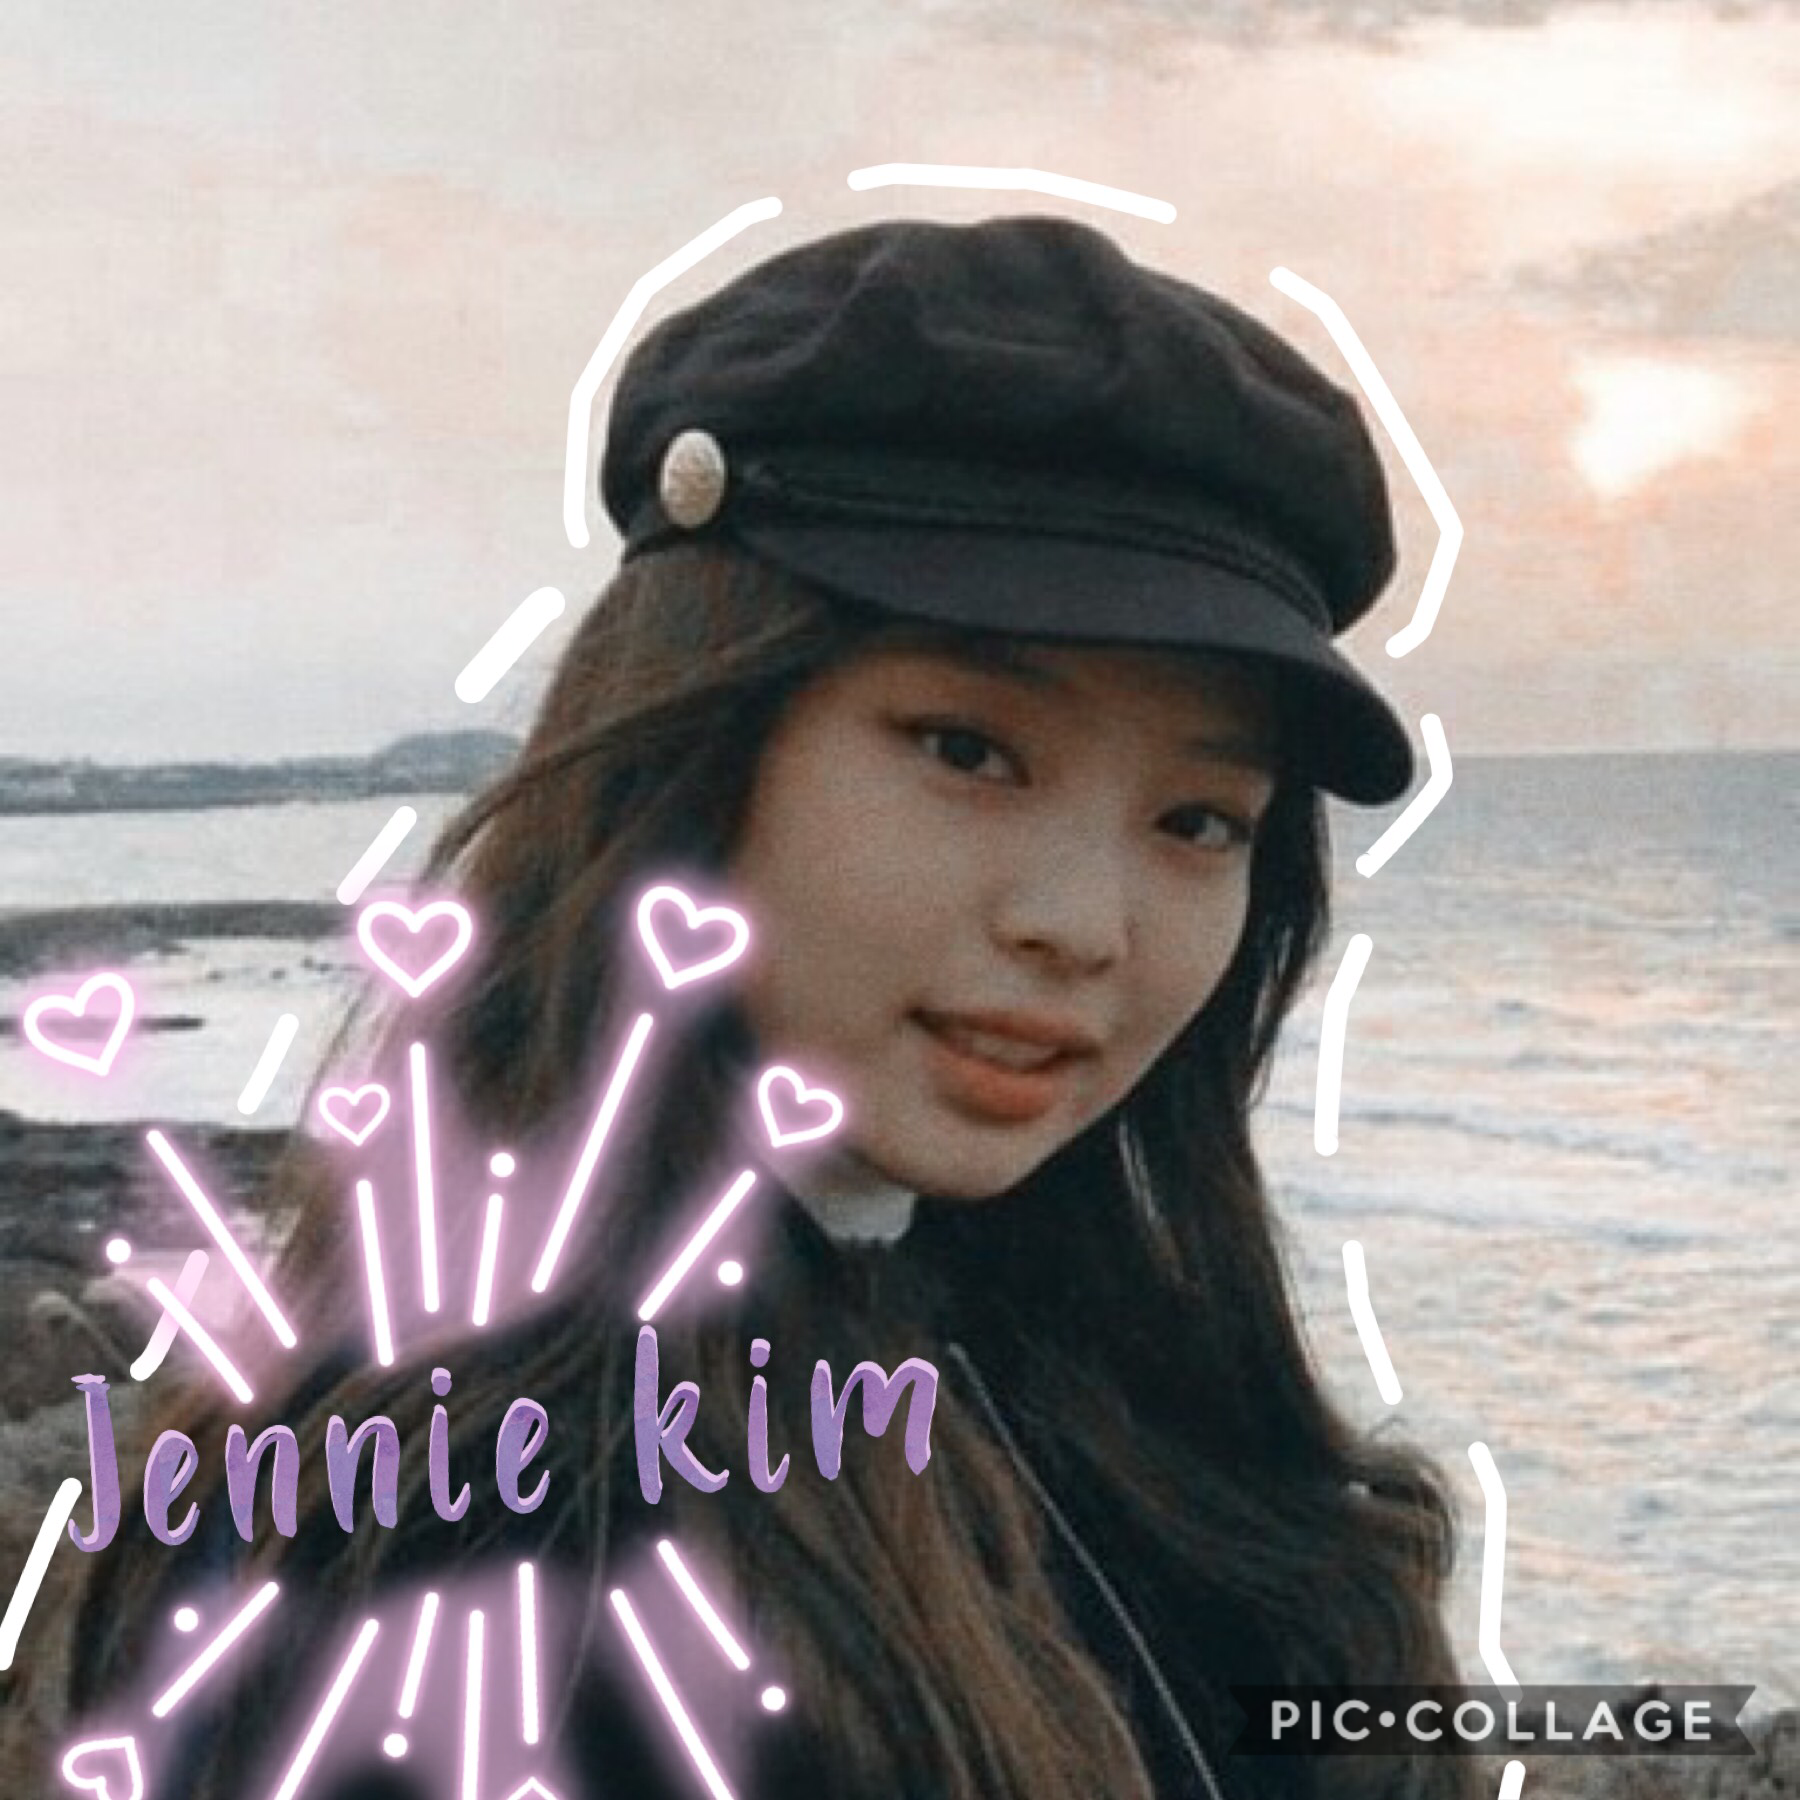 Jennie kim (made by sis)